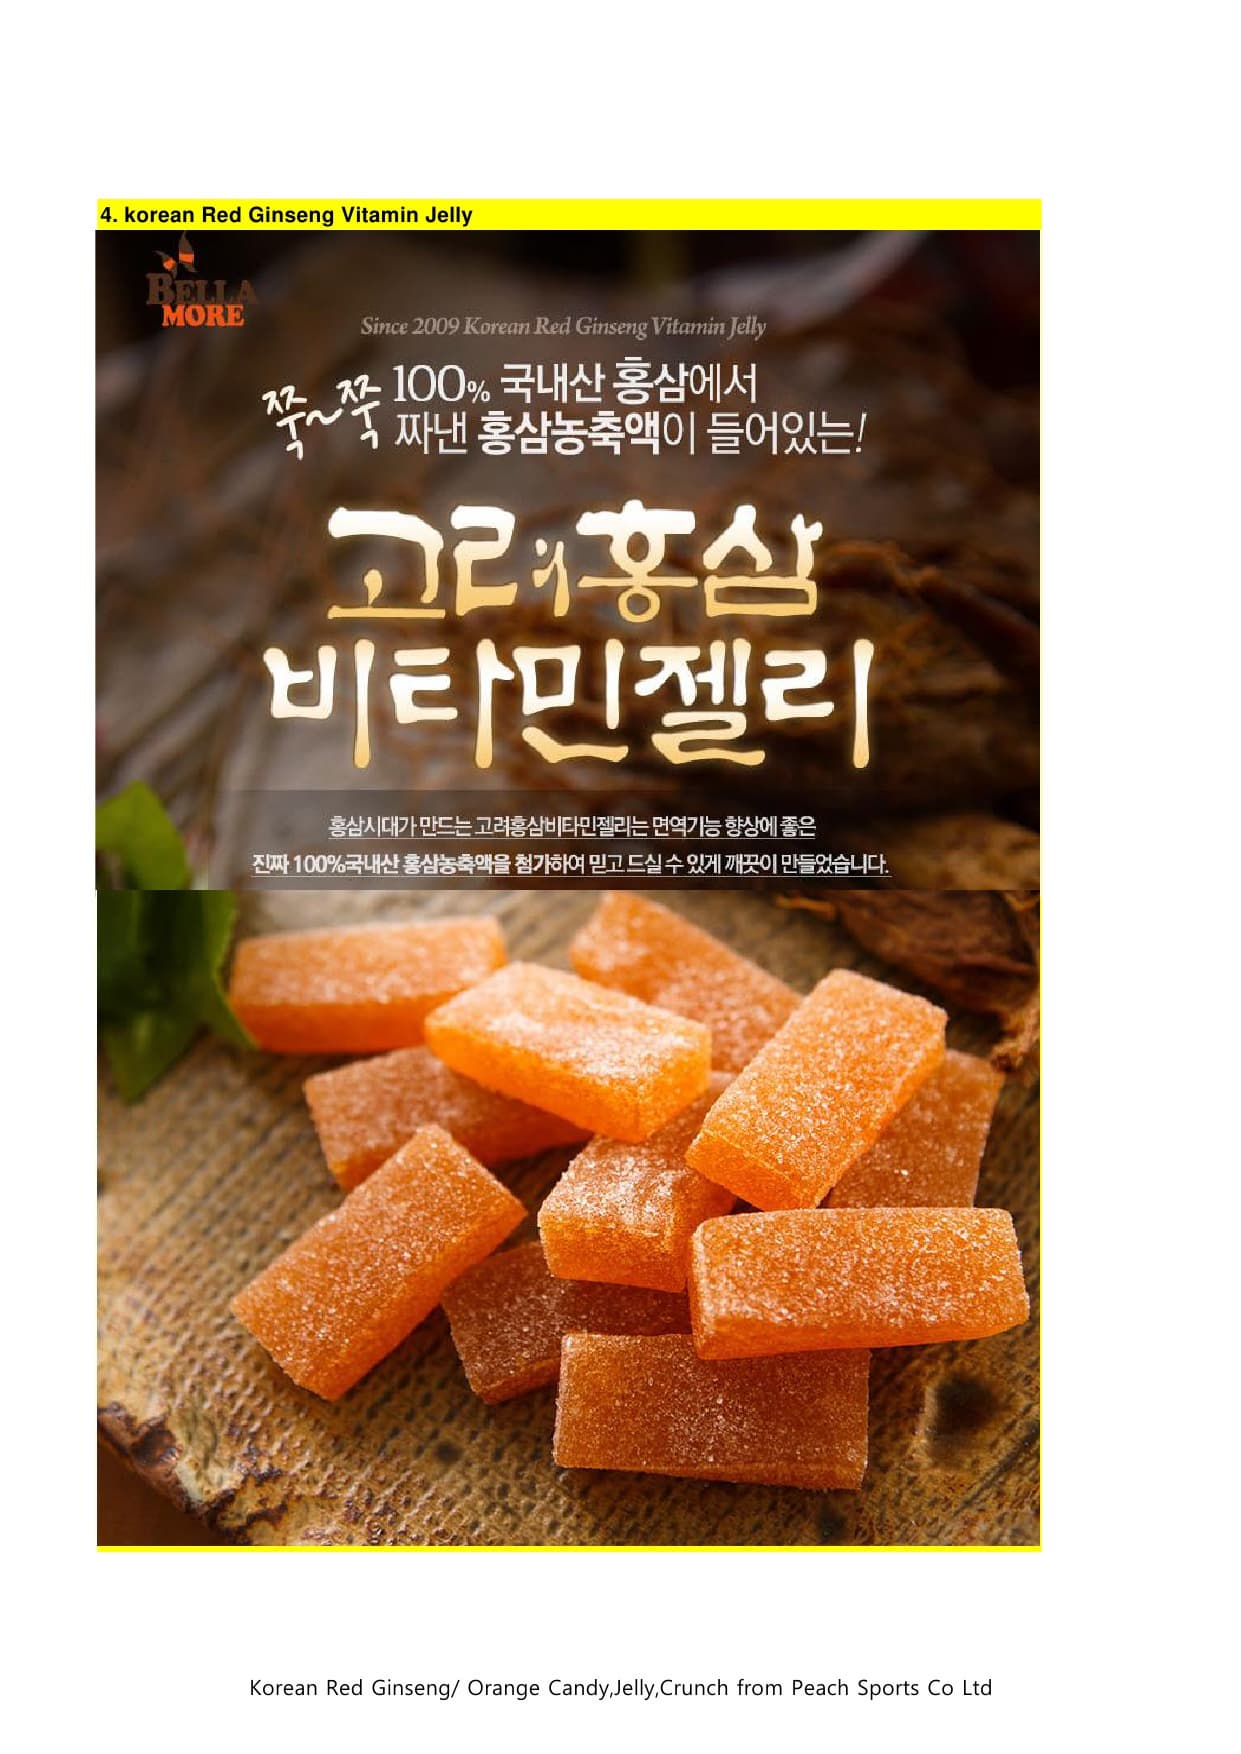 Korean Red Ginseng Vitamin Jelly